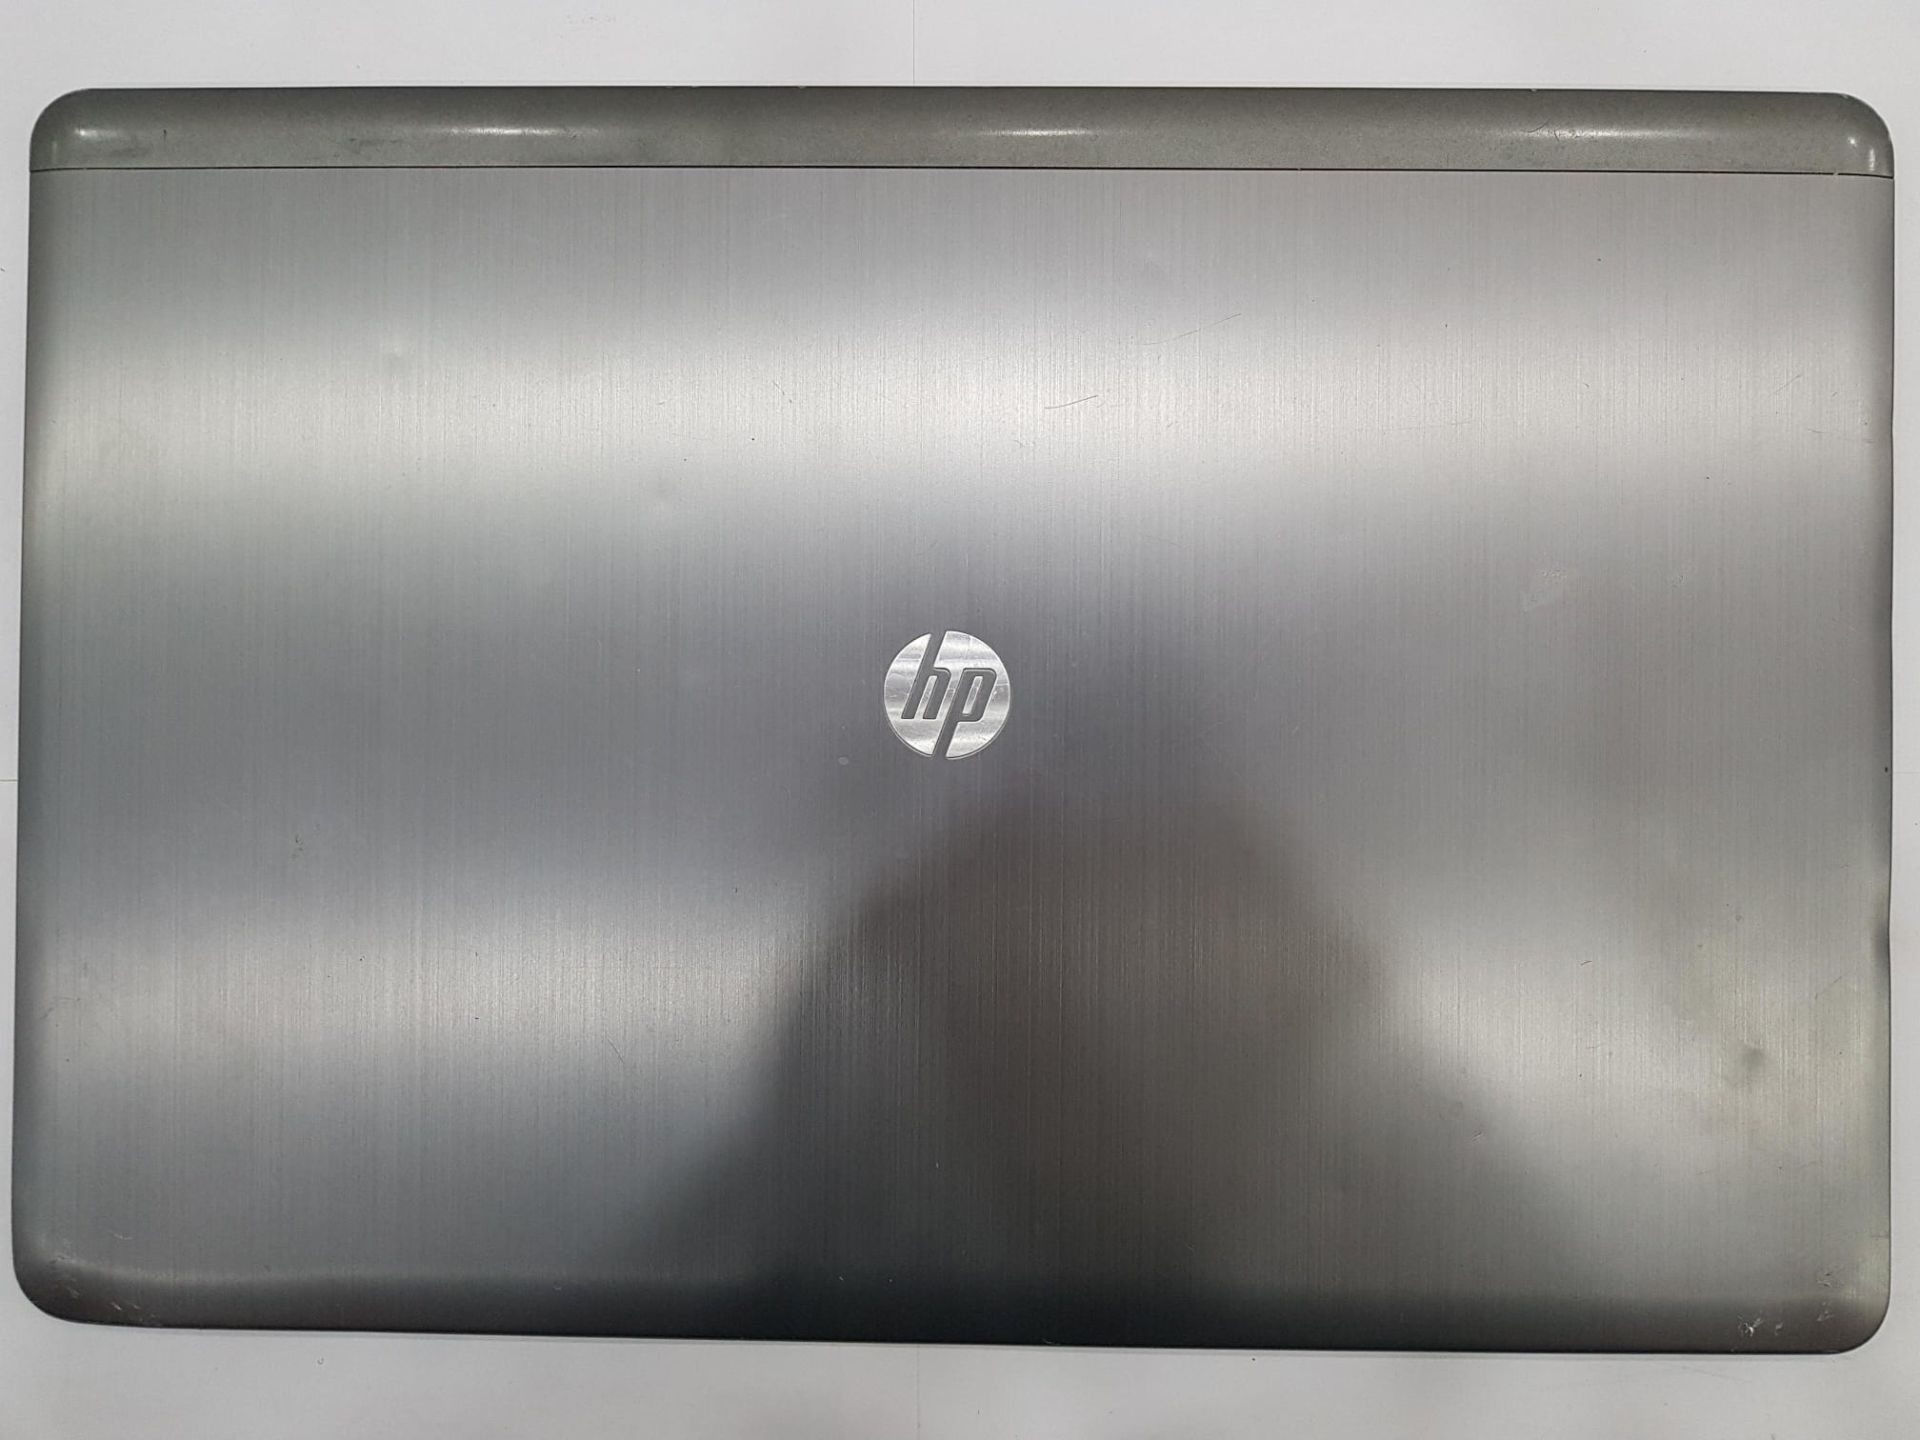 En ucuz 2. EL - HP PROBOOK 4520S 42.4SJ15.001  LCD EKRAN BACK ARKA COVER tavsiyesi